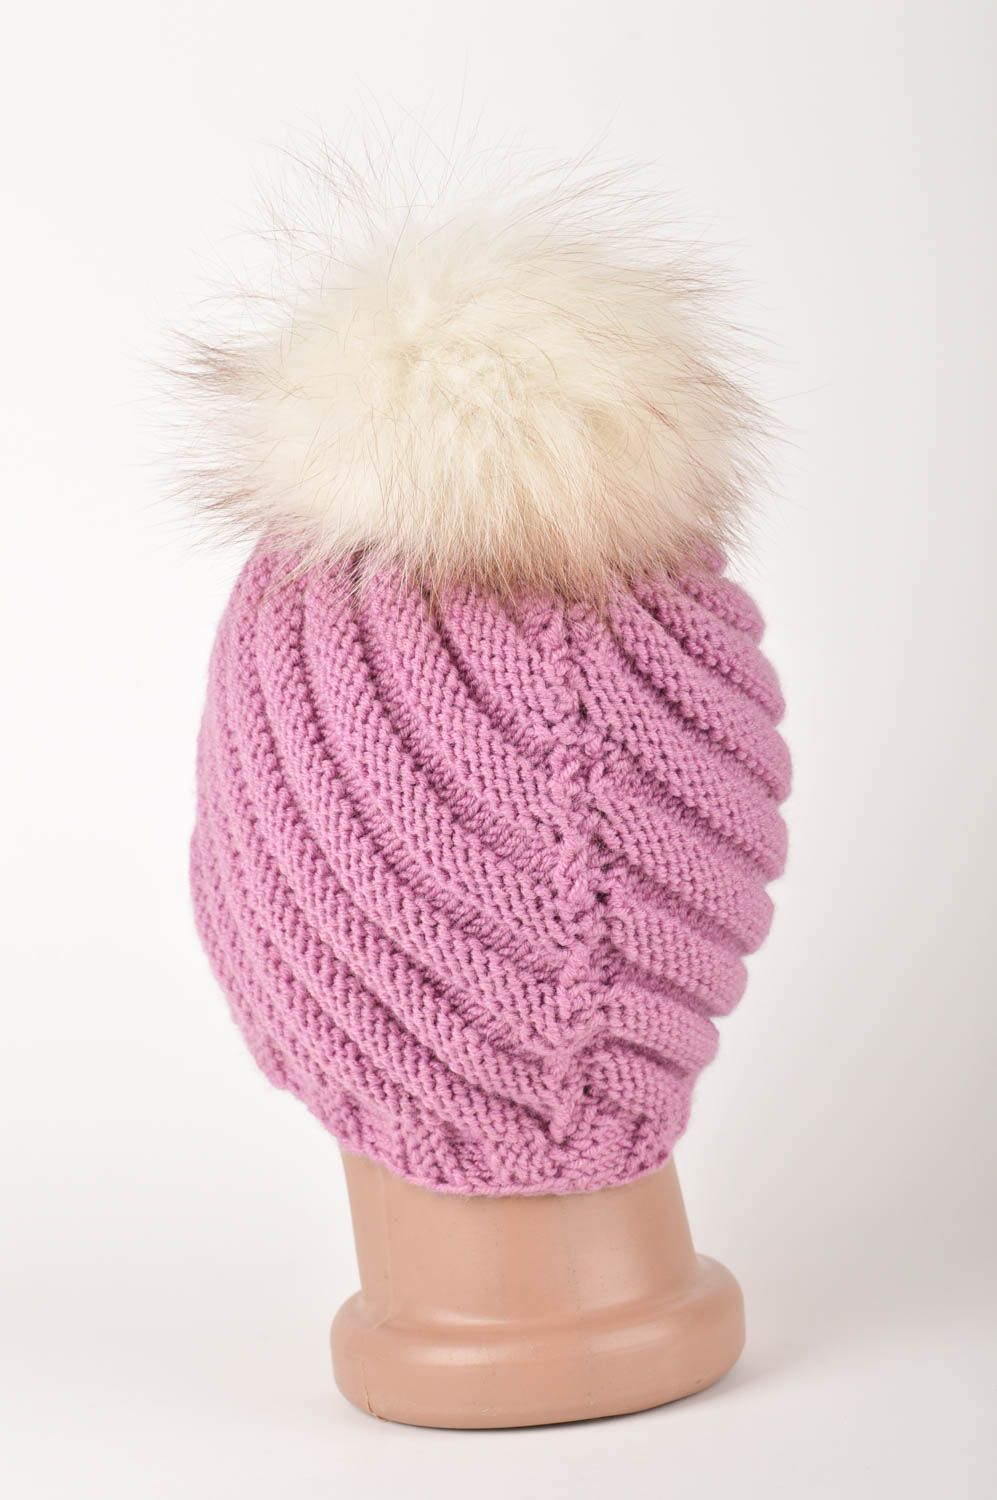 Handmade womens hat crochet winter hat ladies winter hats designer accessories photo 5